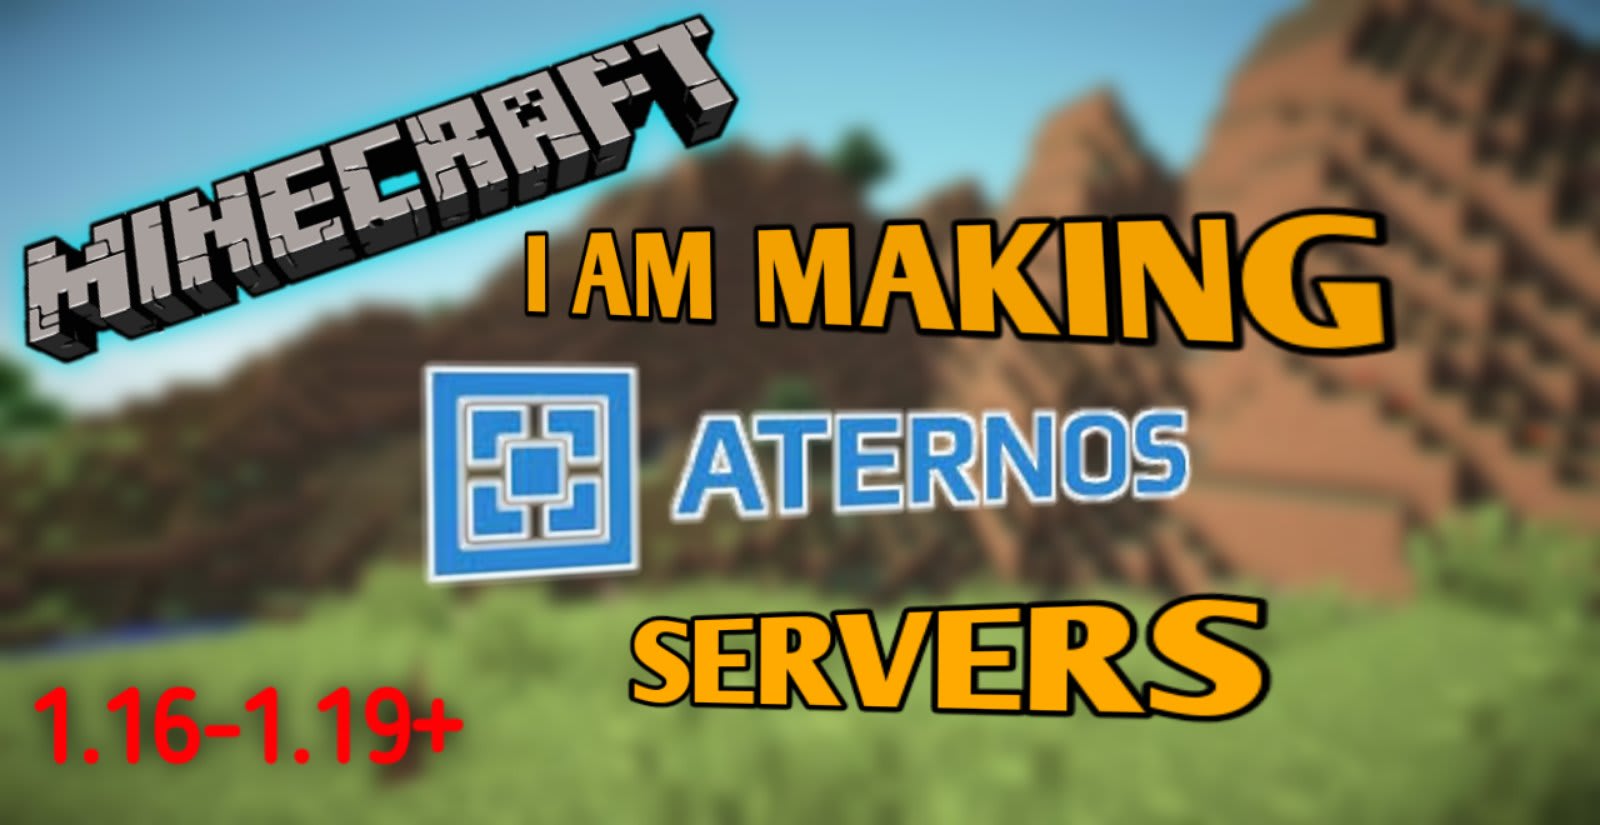 A fantastic Minecraft server. I will build a Minecraft server for you.